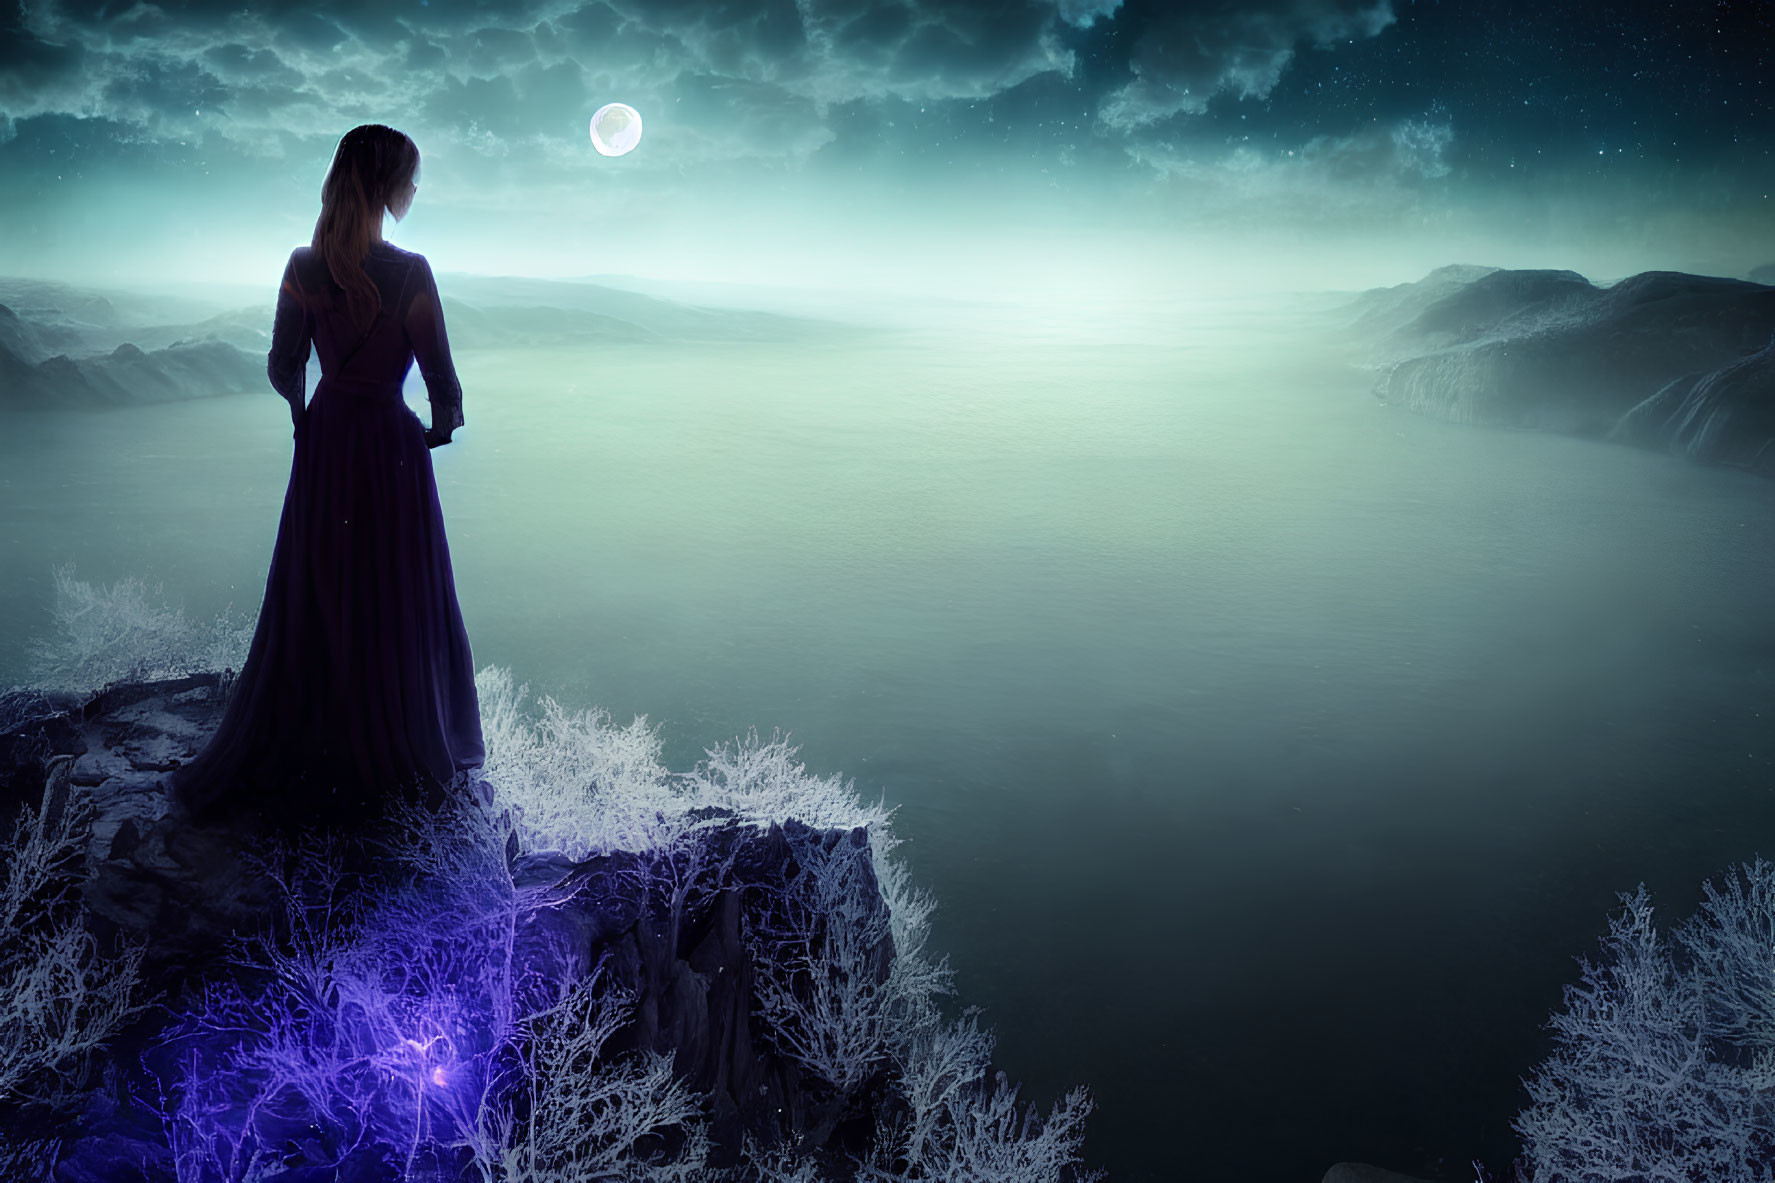 Woman in Black Dress on Cliff Overlooking Moonlit Mystical Landscape